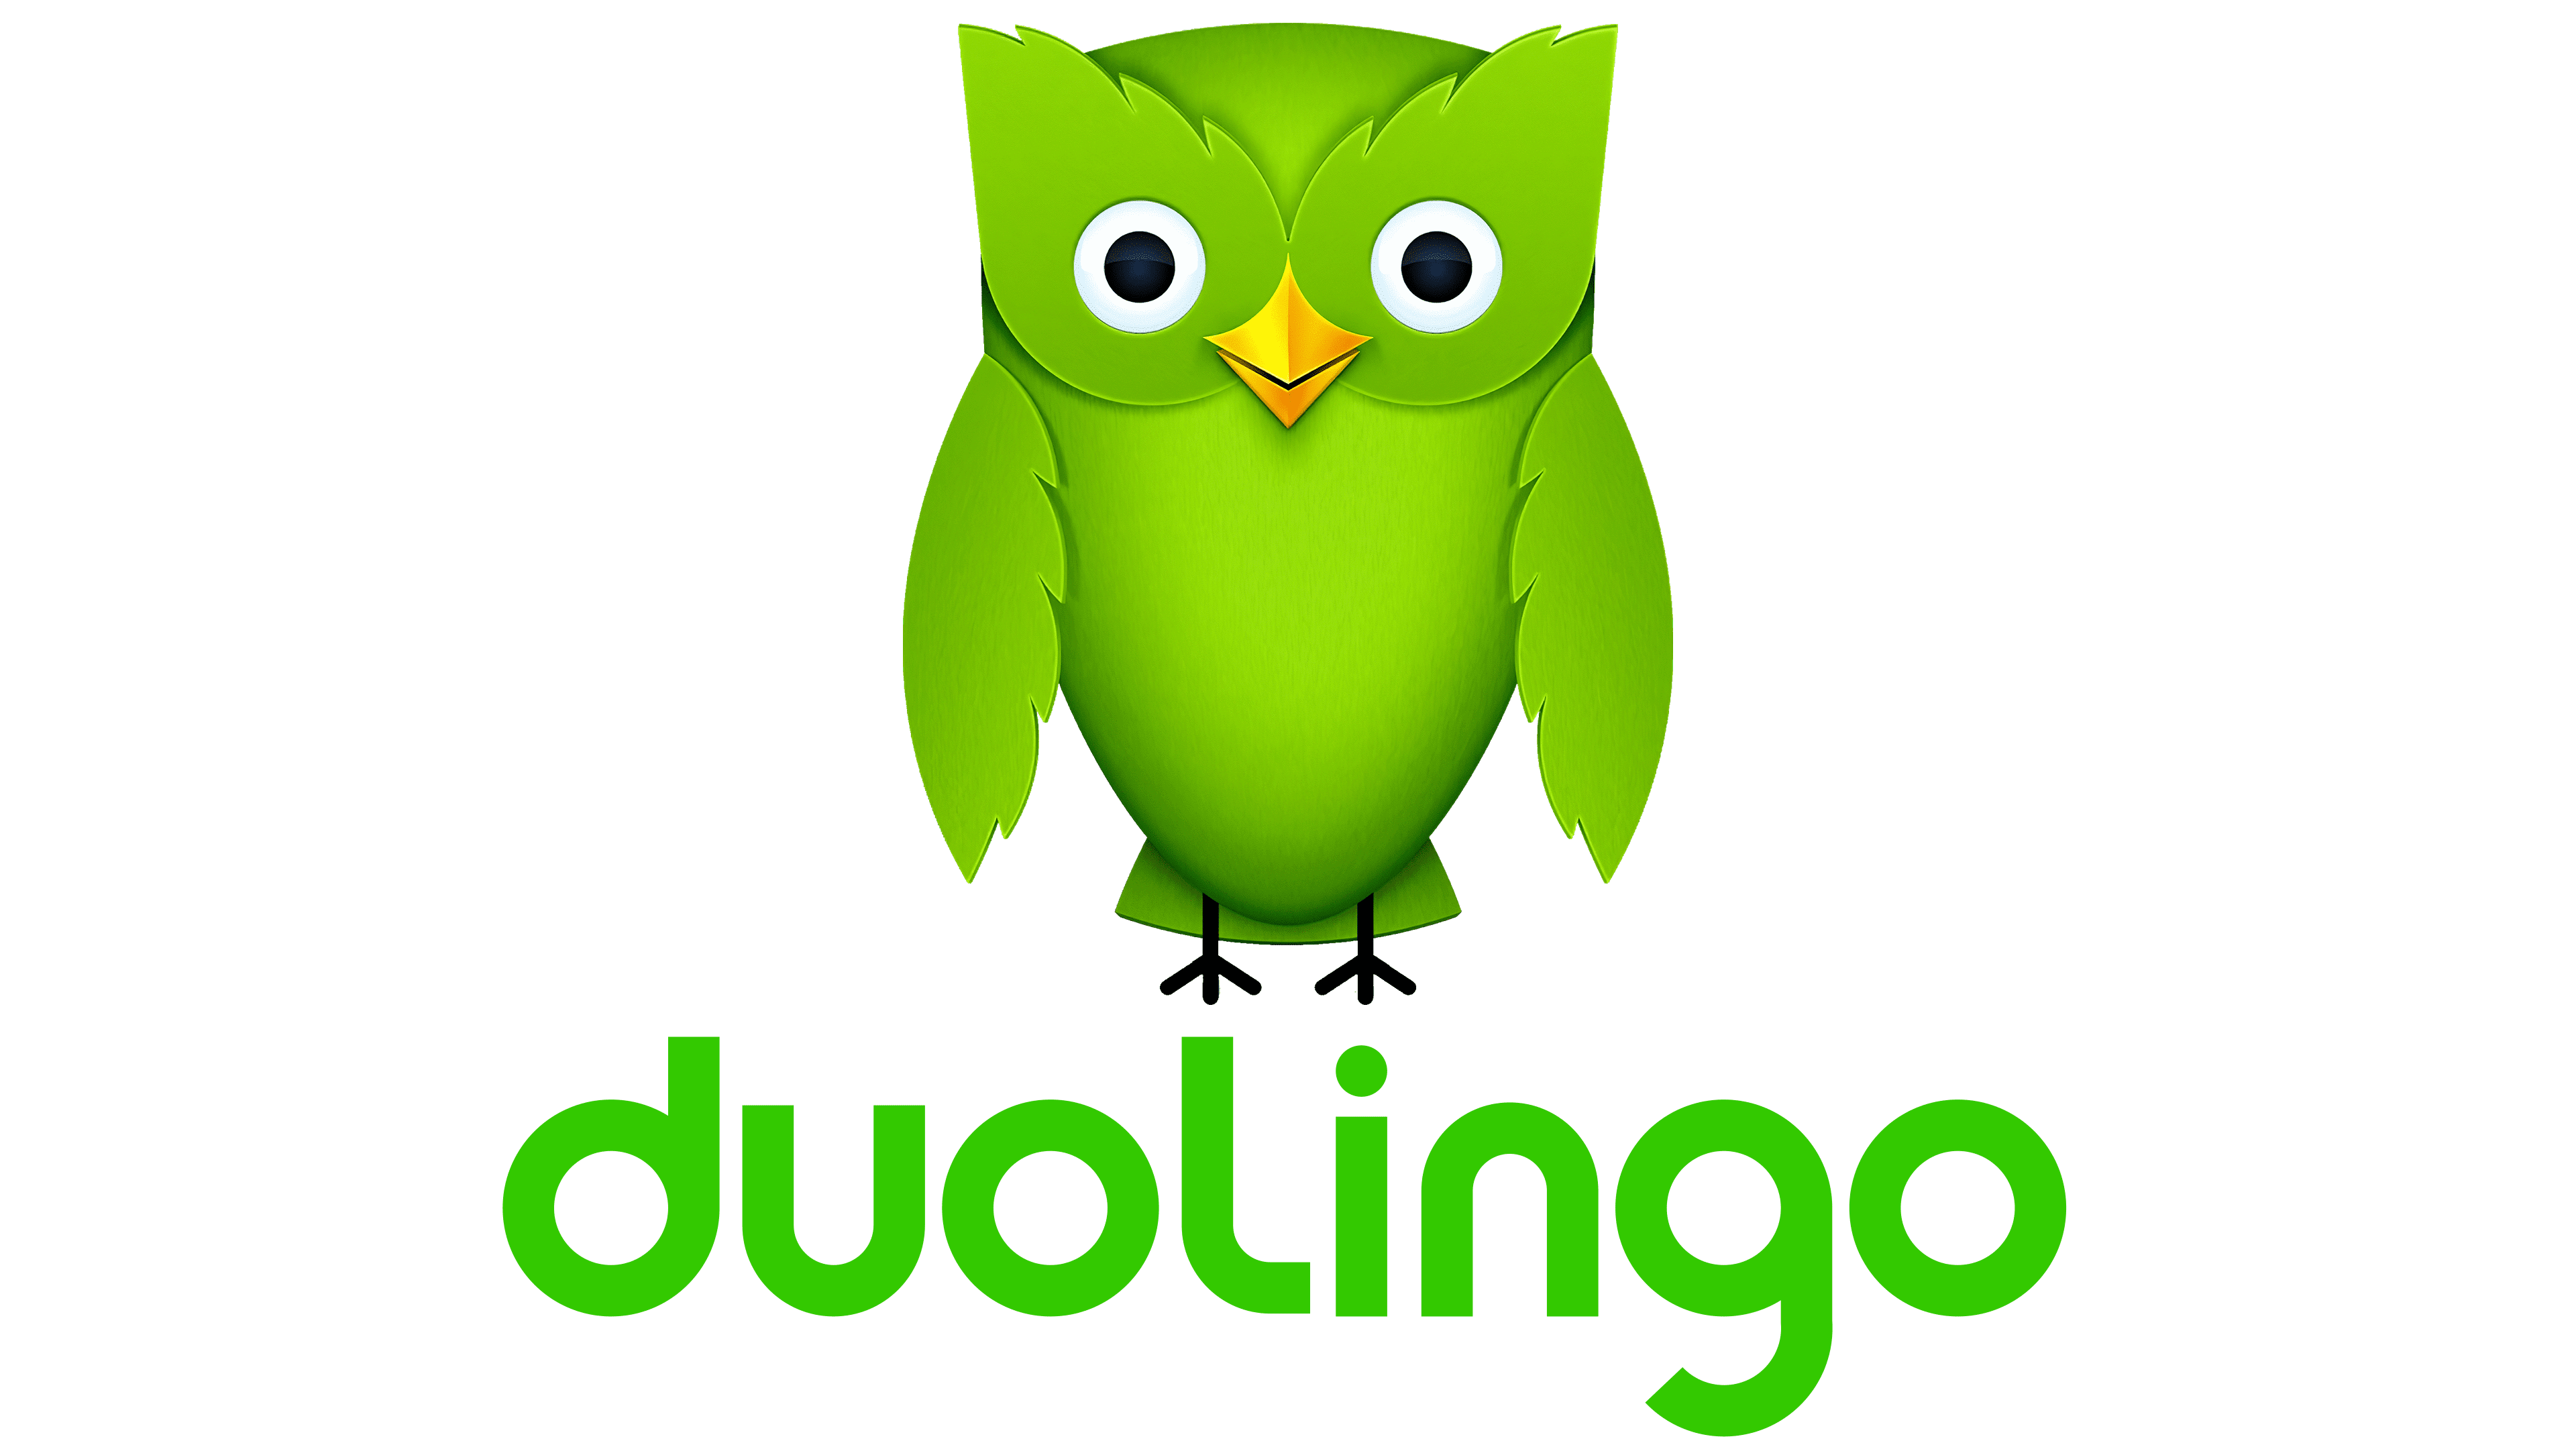 duolingo